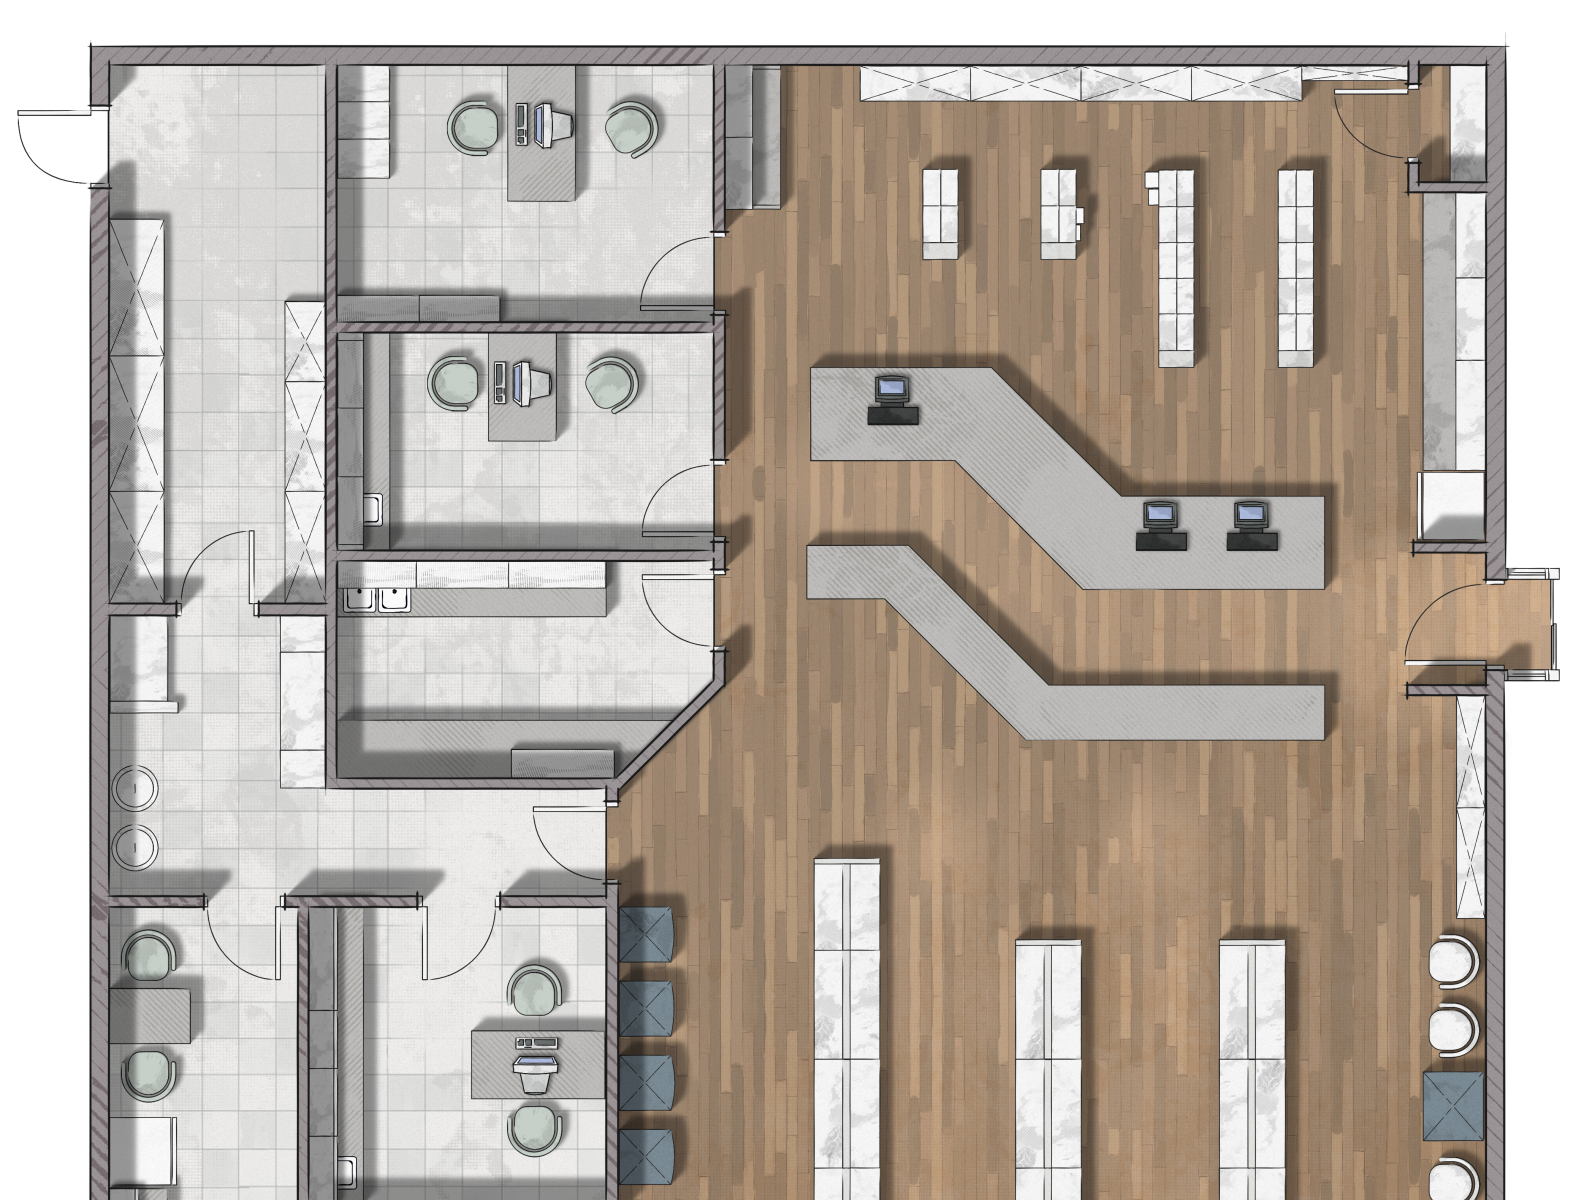 Pharmacy floor plan rendering by Alberto Talens Fernandez on Dribbble